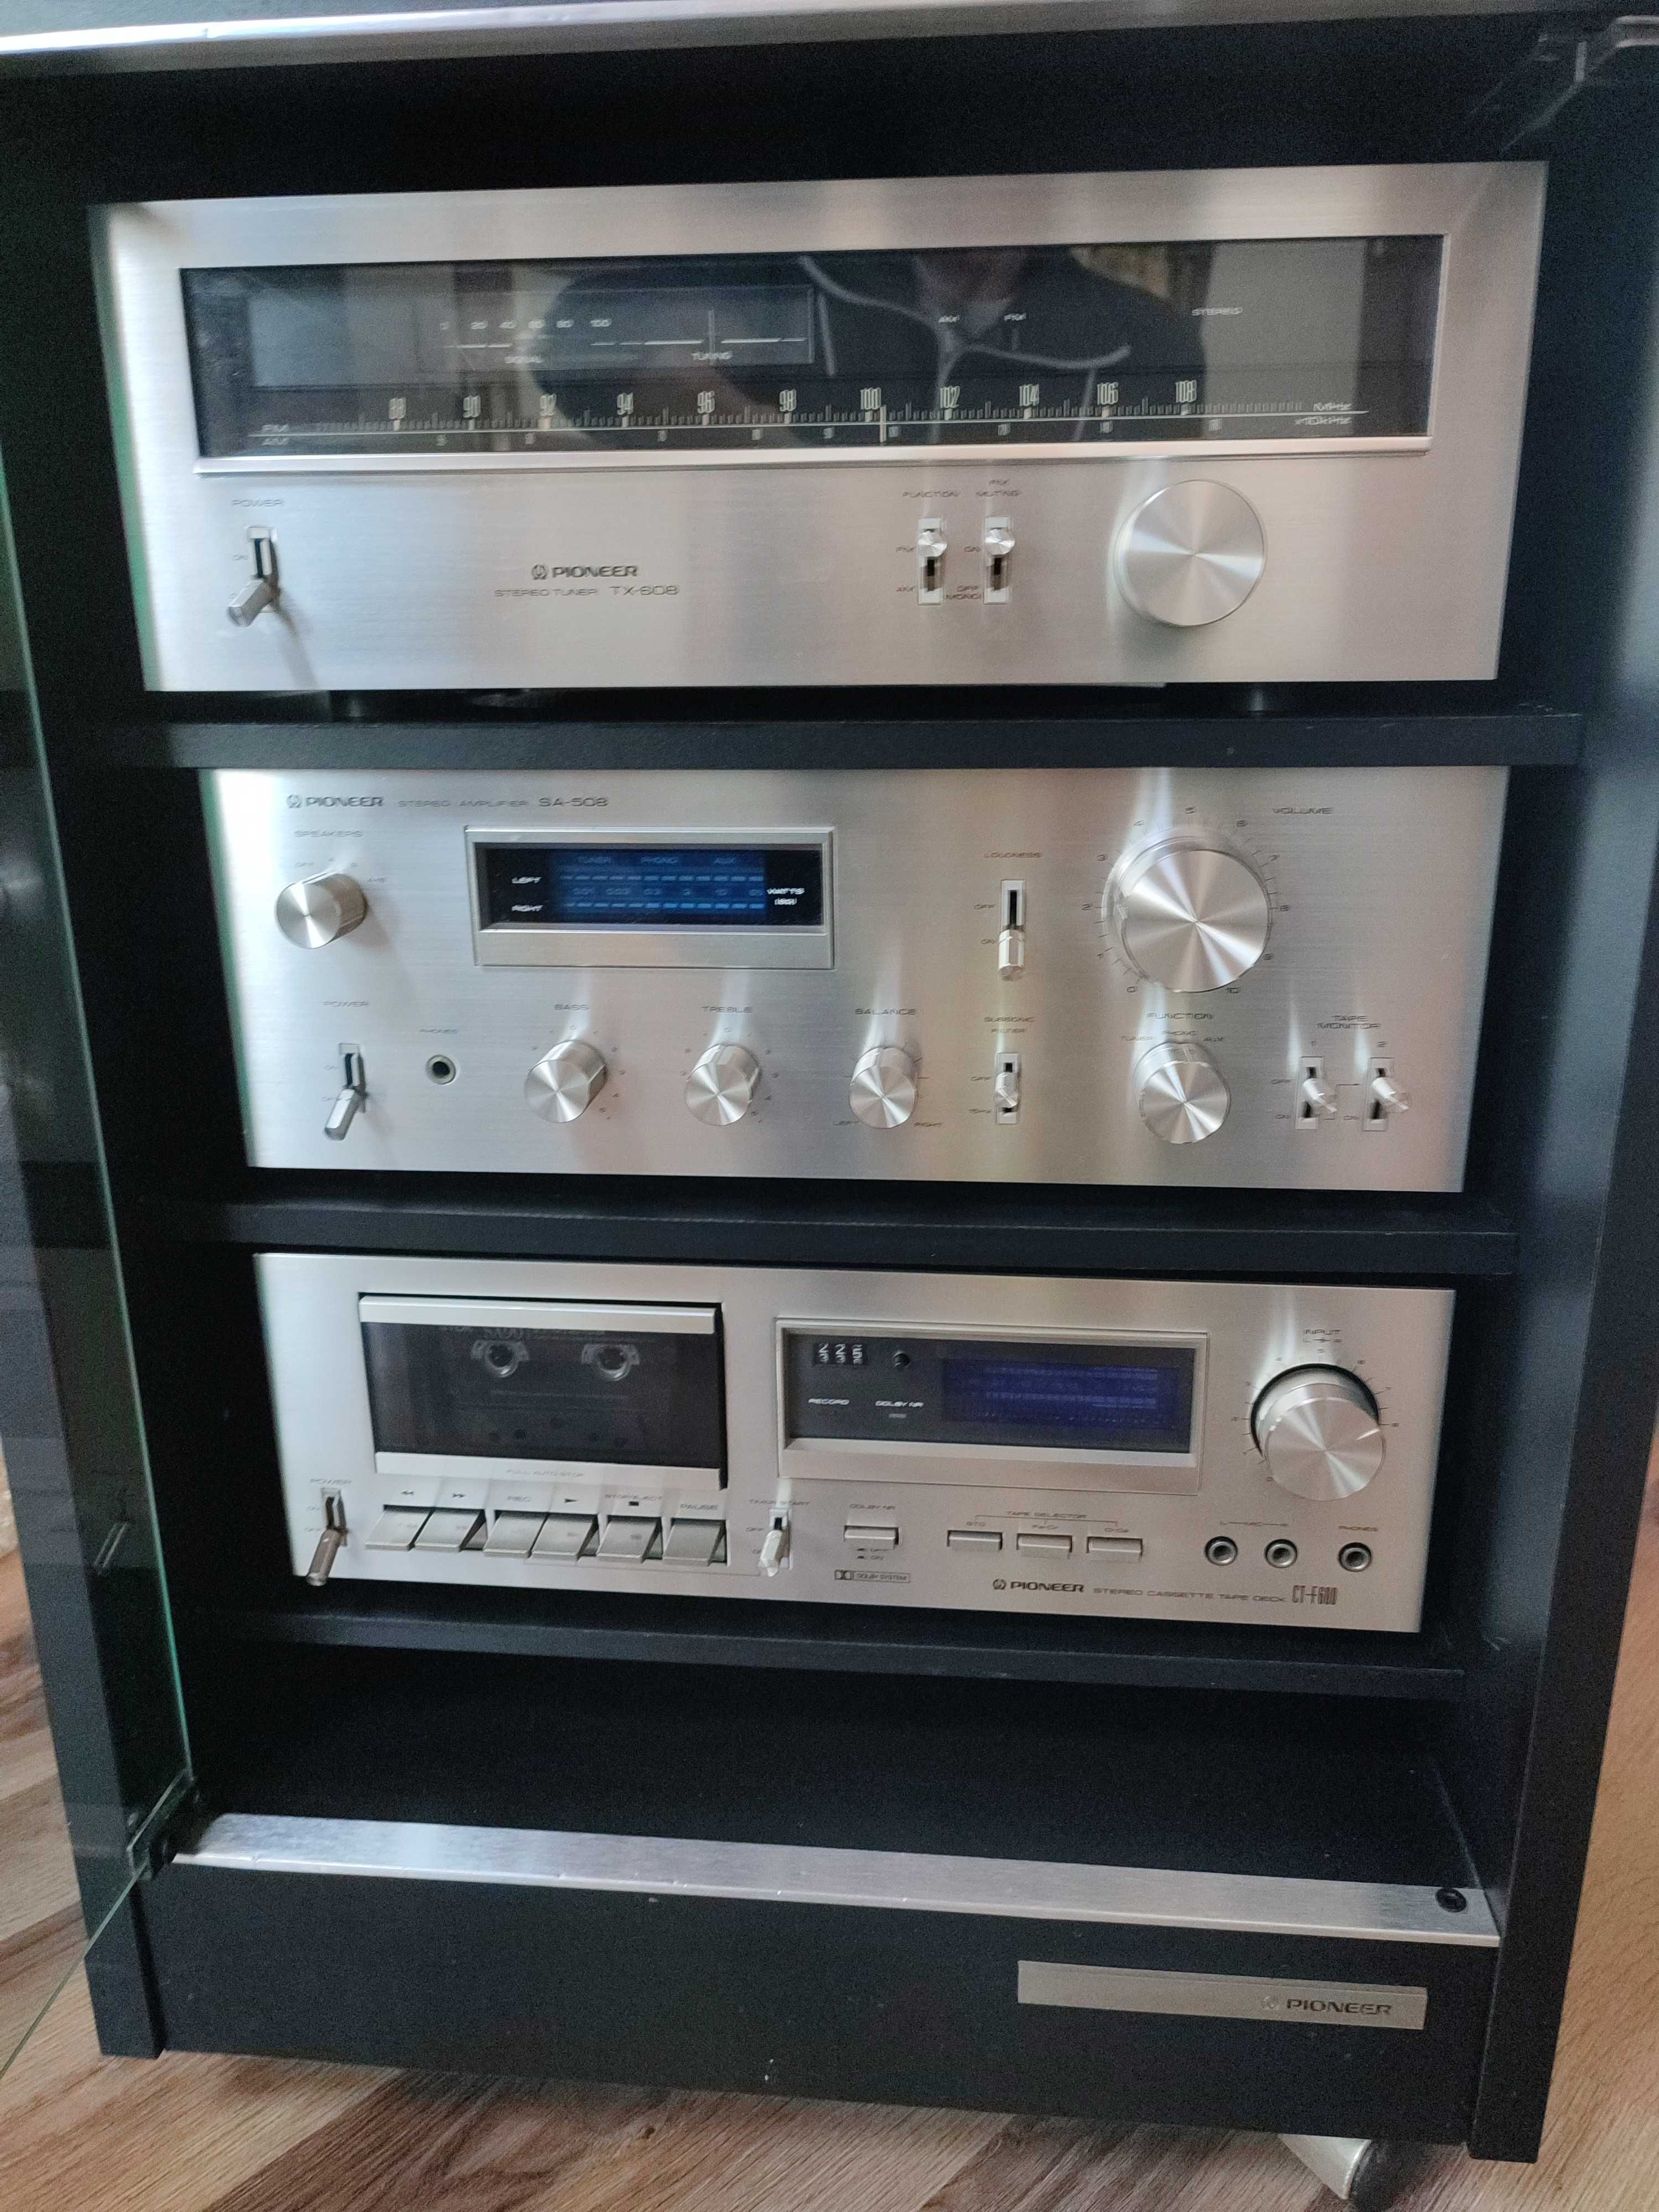 Pioneer sa-508 zestaw stereo , wieża, szafka Pioneer .